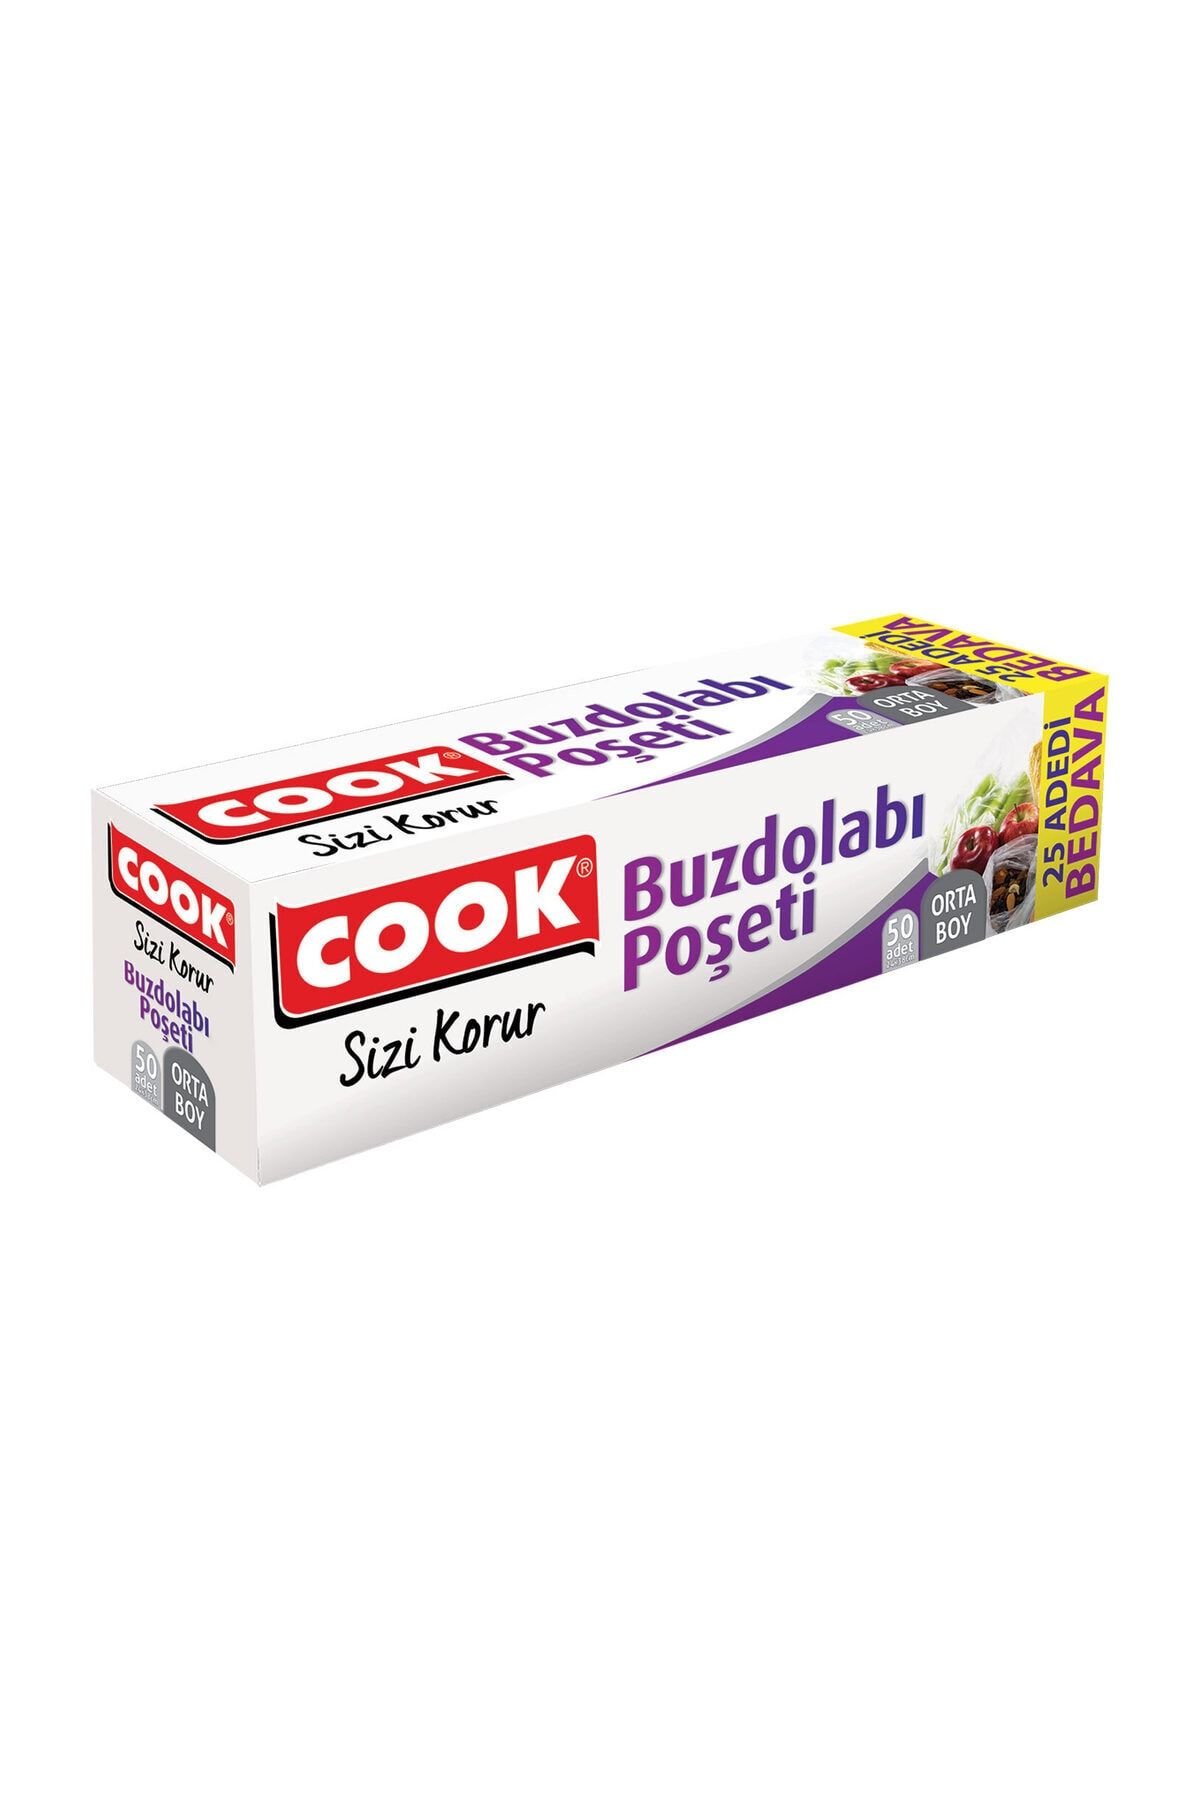 COOK Cook Ekonomik Buzdolabı Poşeti Orta Boy 50'Li